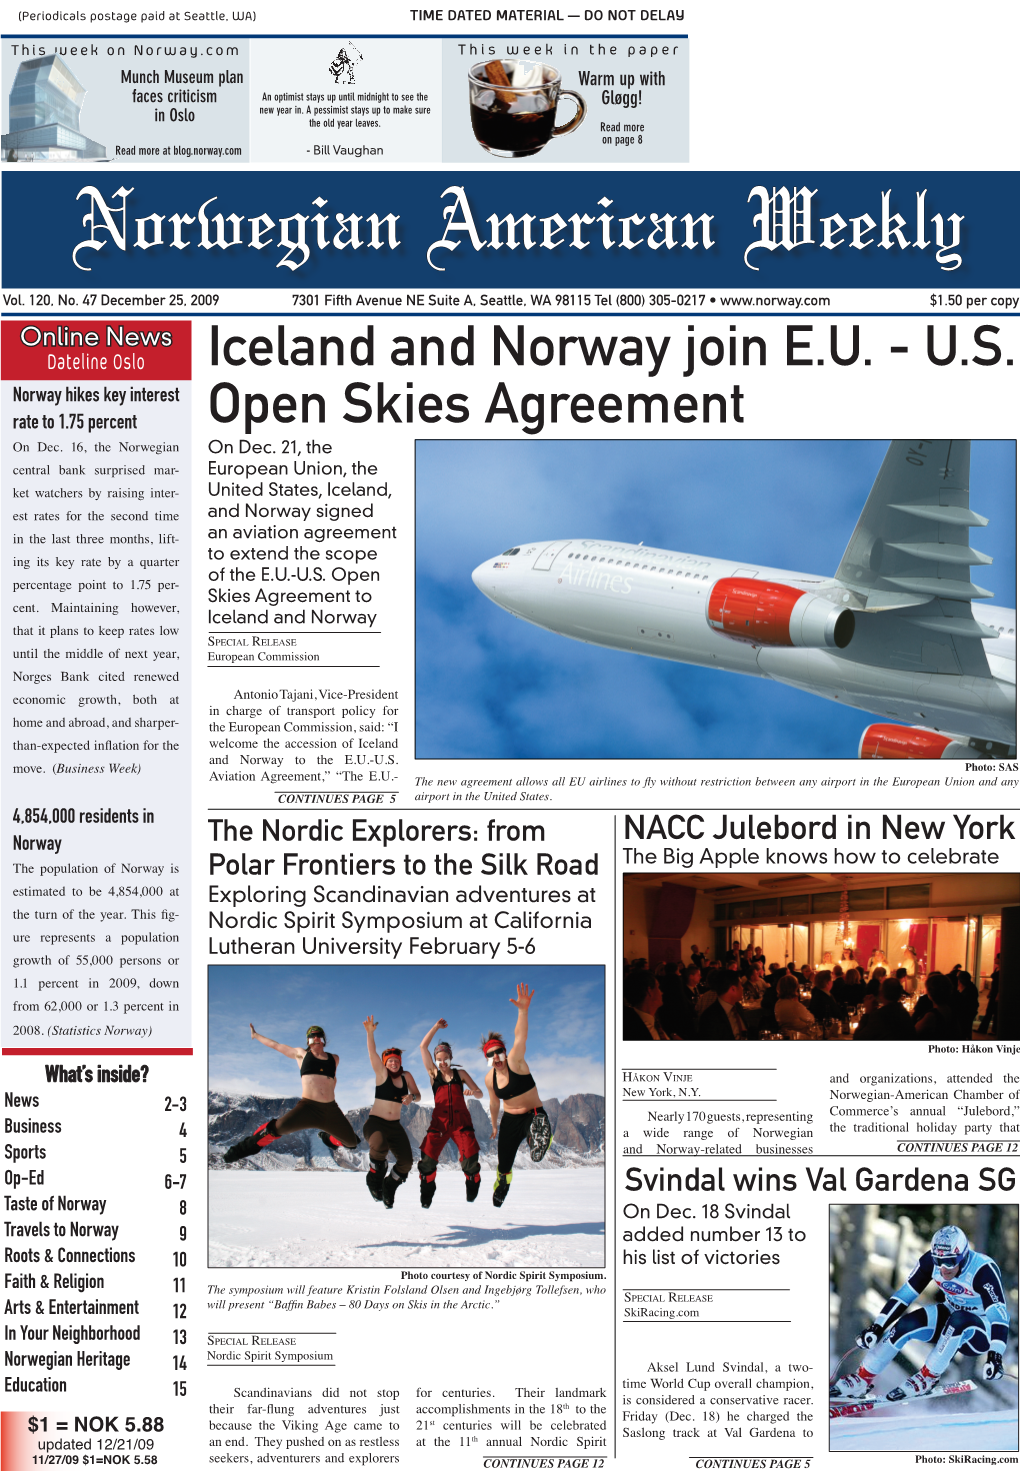 US Open Skies Agreement